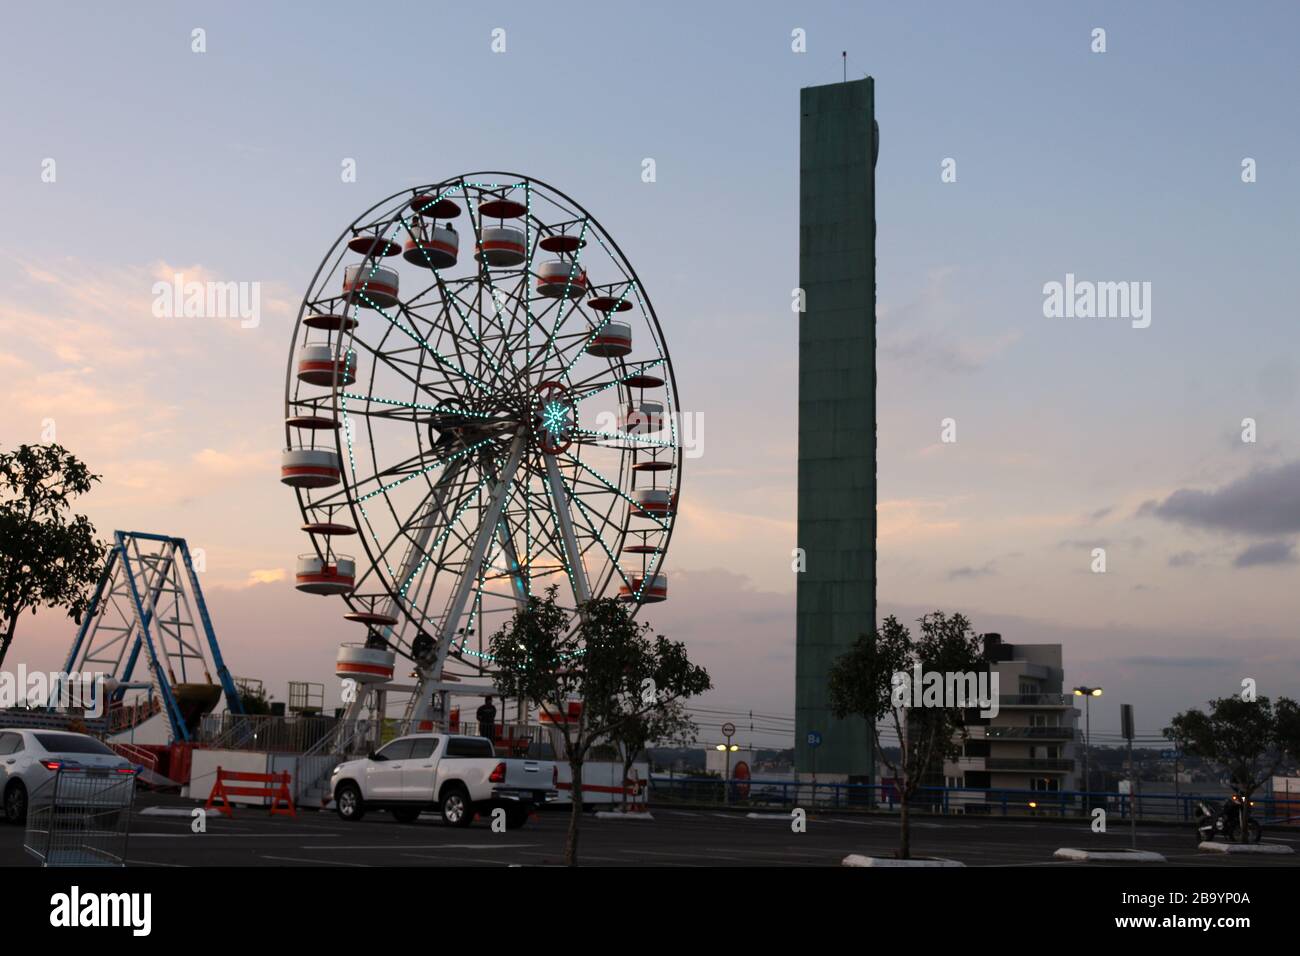 The ferris wheel of a traveling amusement park Stock Photo